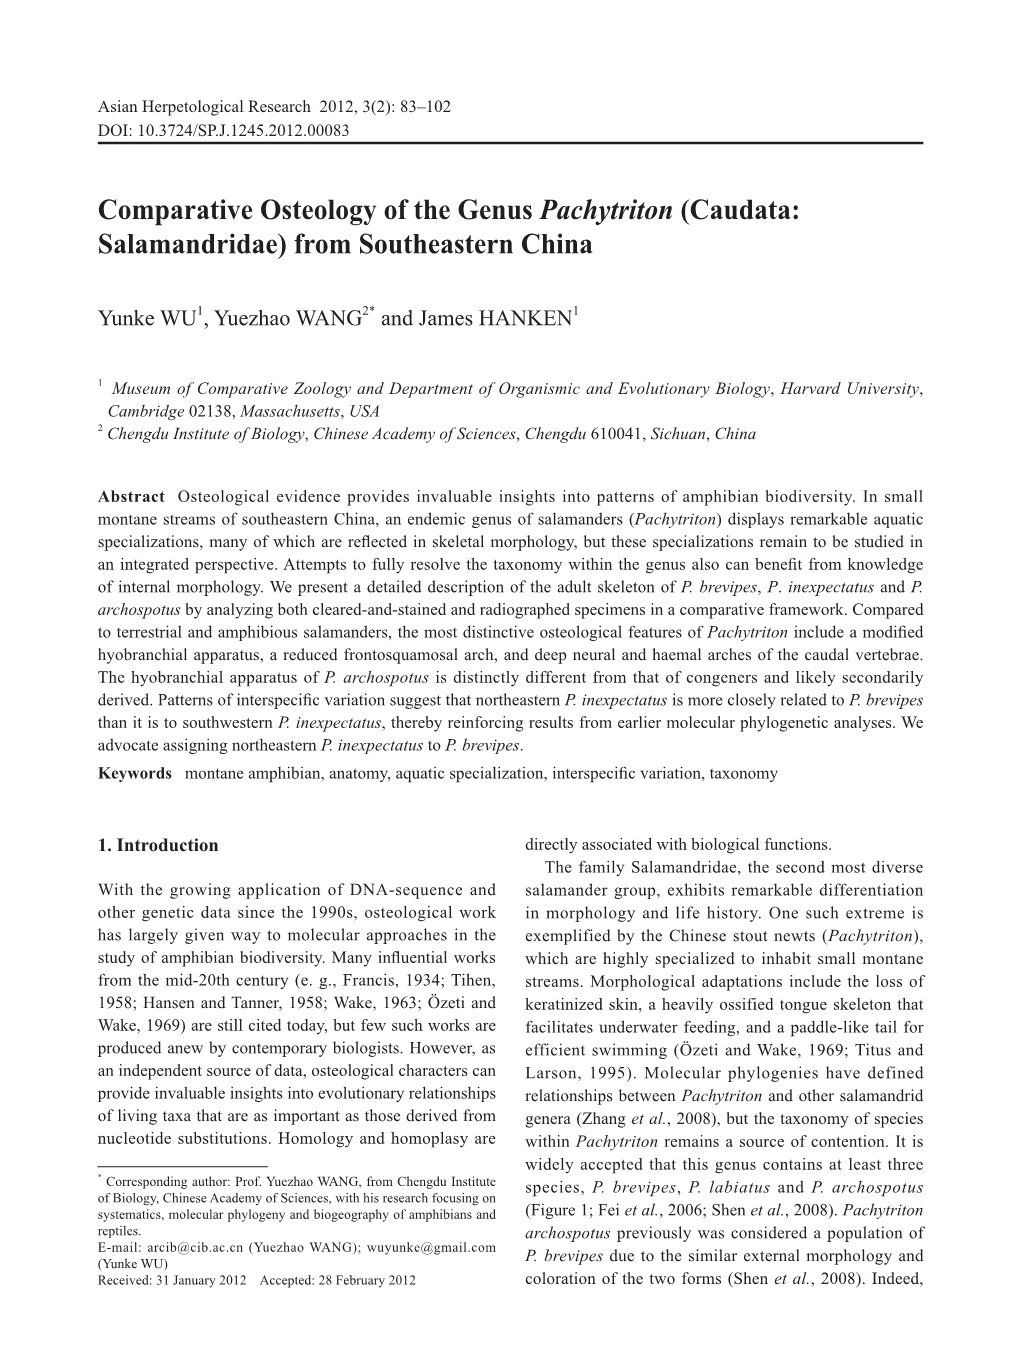 Comparative Osteology of the Genus Pachytriton (Caudata: Salamandridae) from Southeastern China